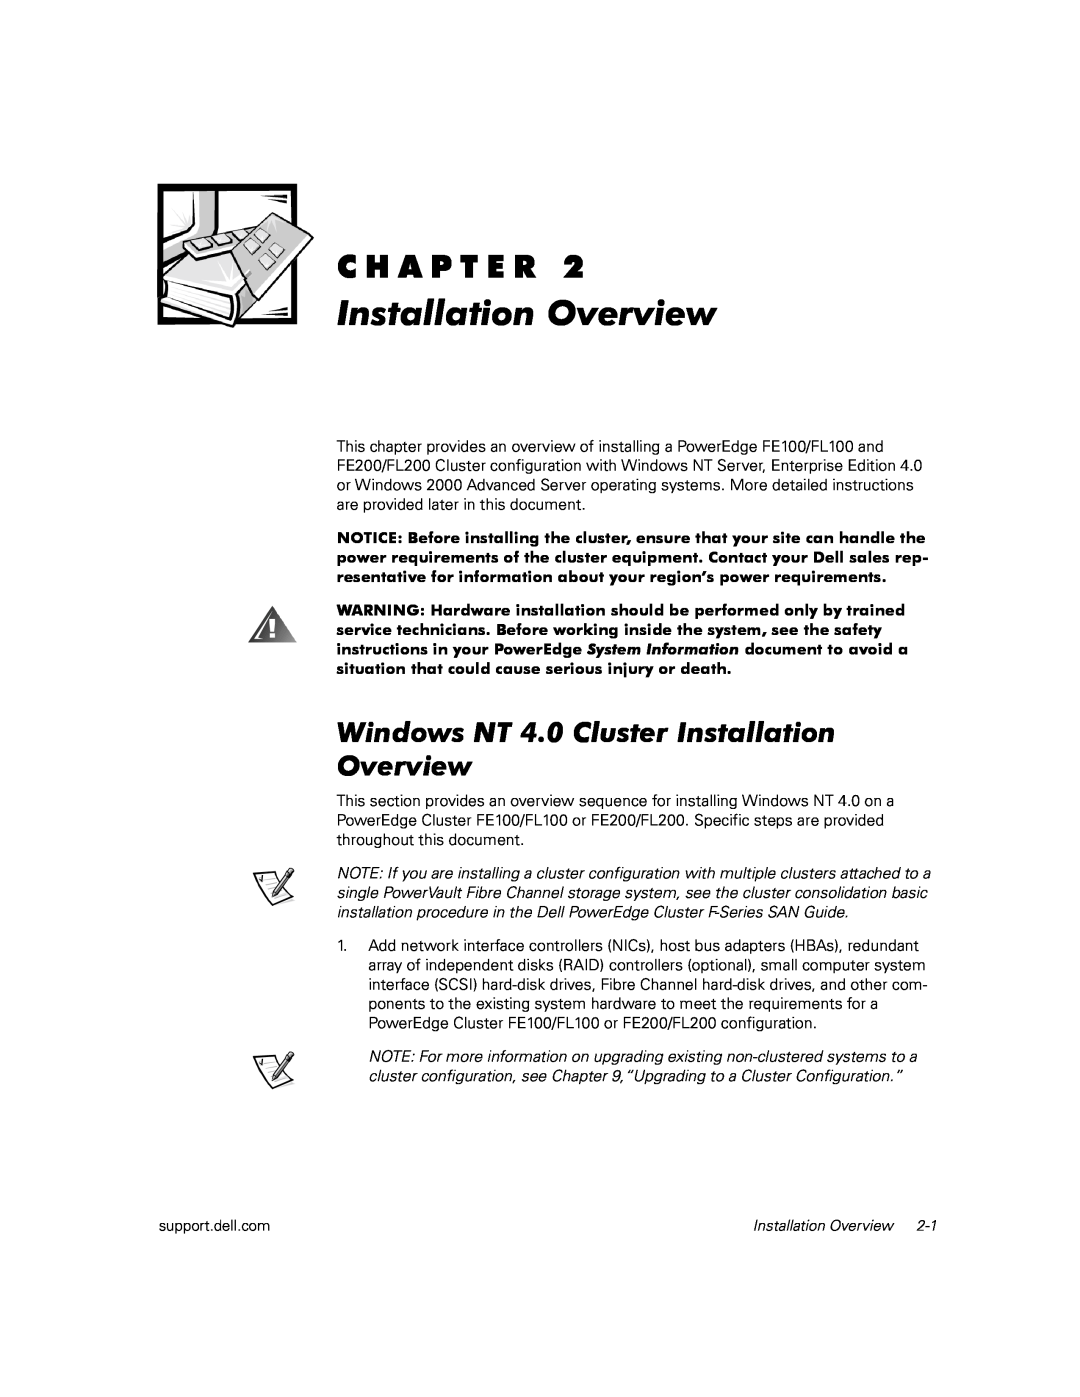 Dell FE200/FL200, FE100/FL100 manual Windows NT 4.0 Cluster Installation Overview, C H A P T E R 